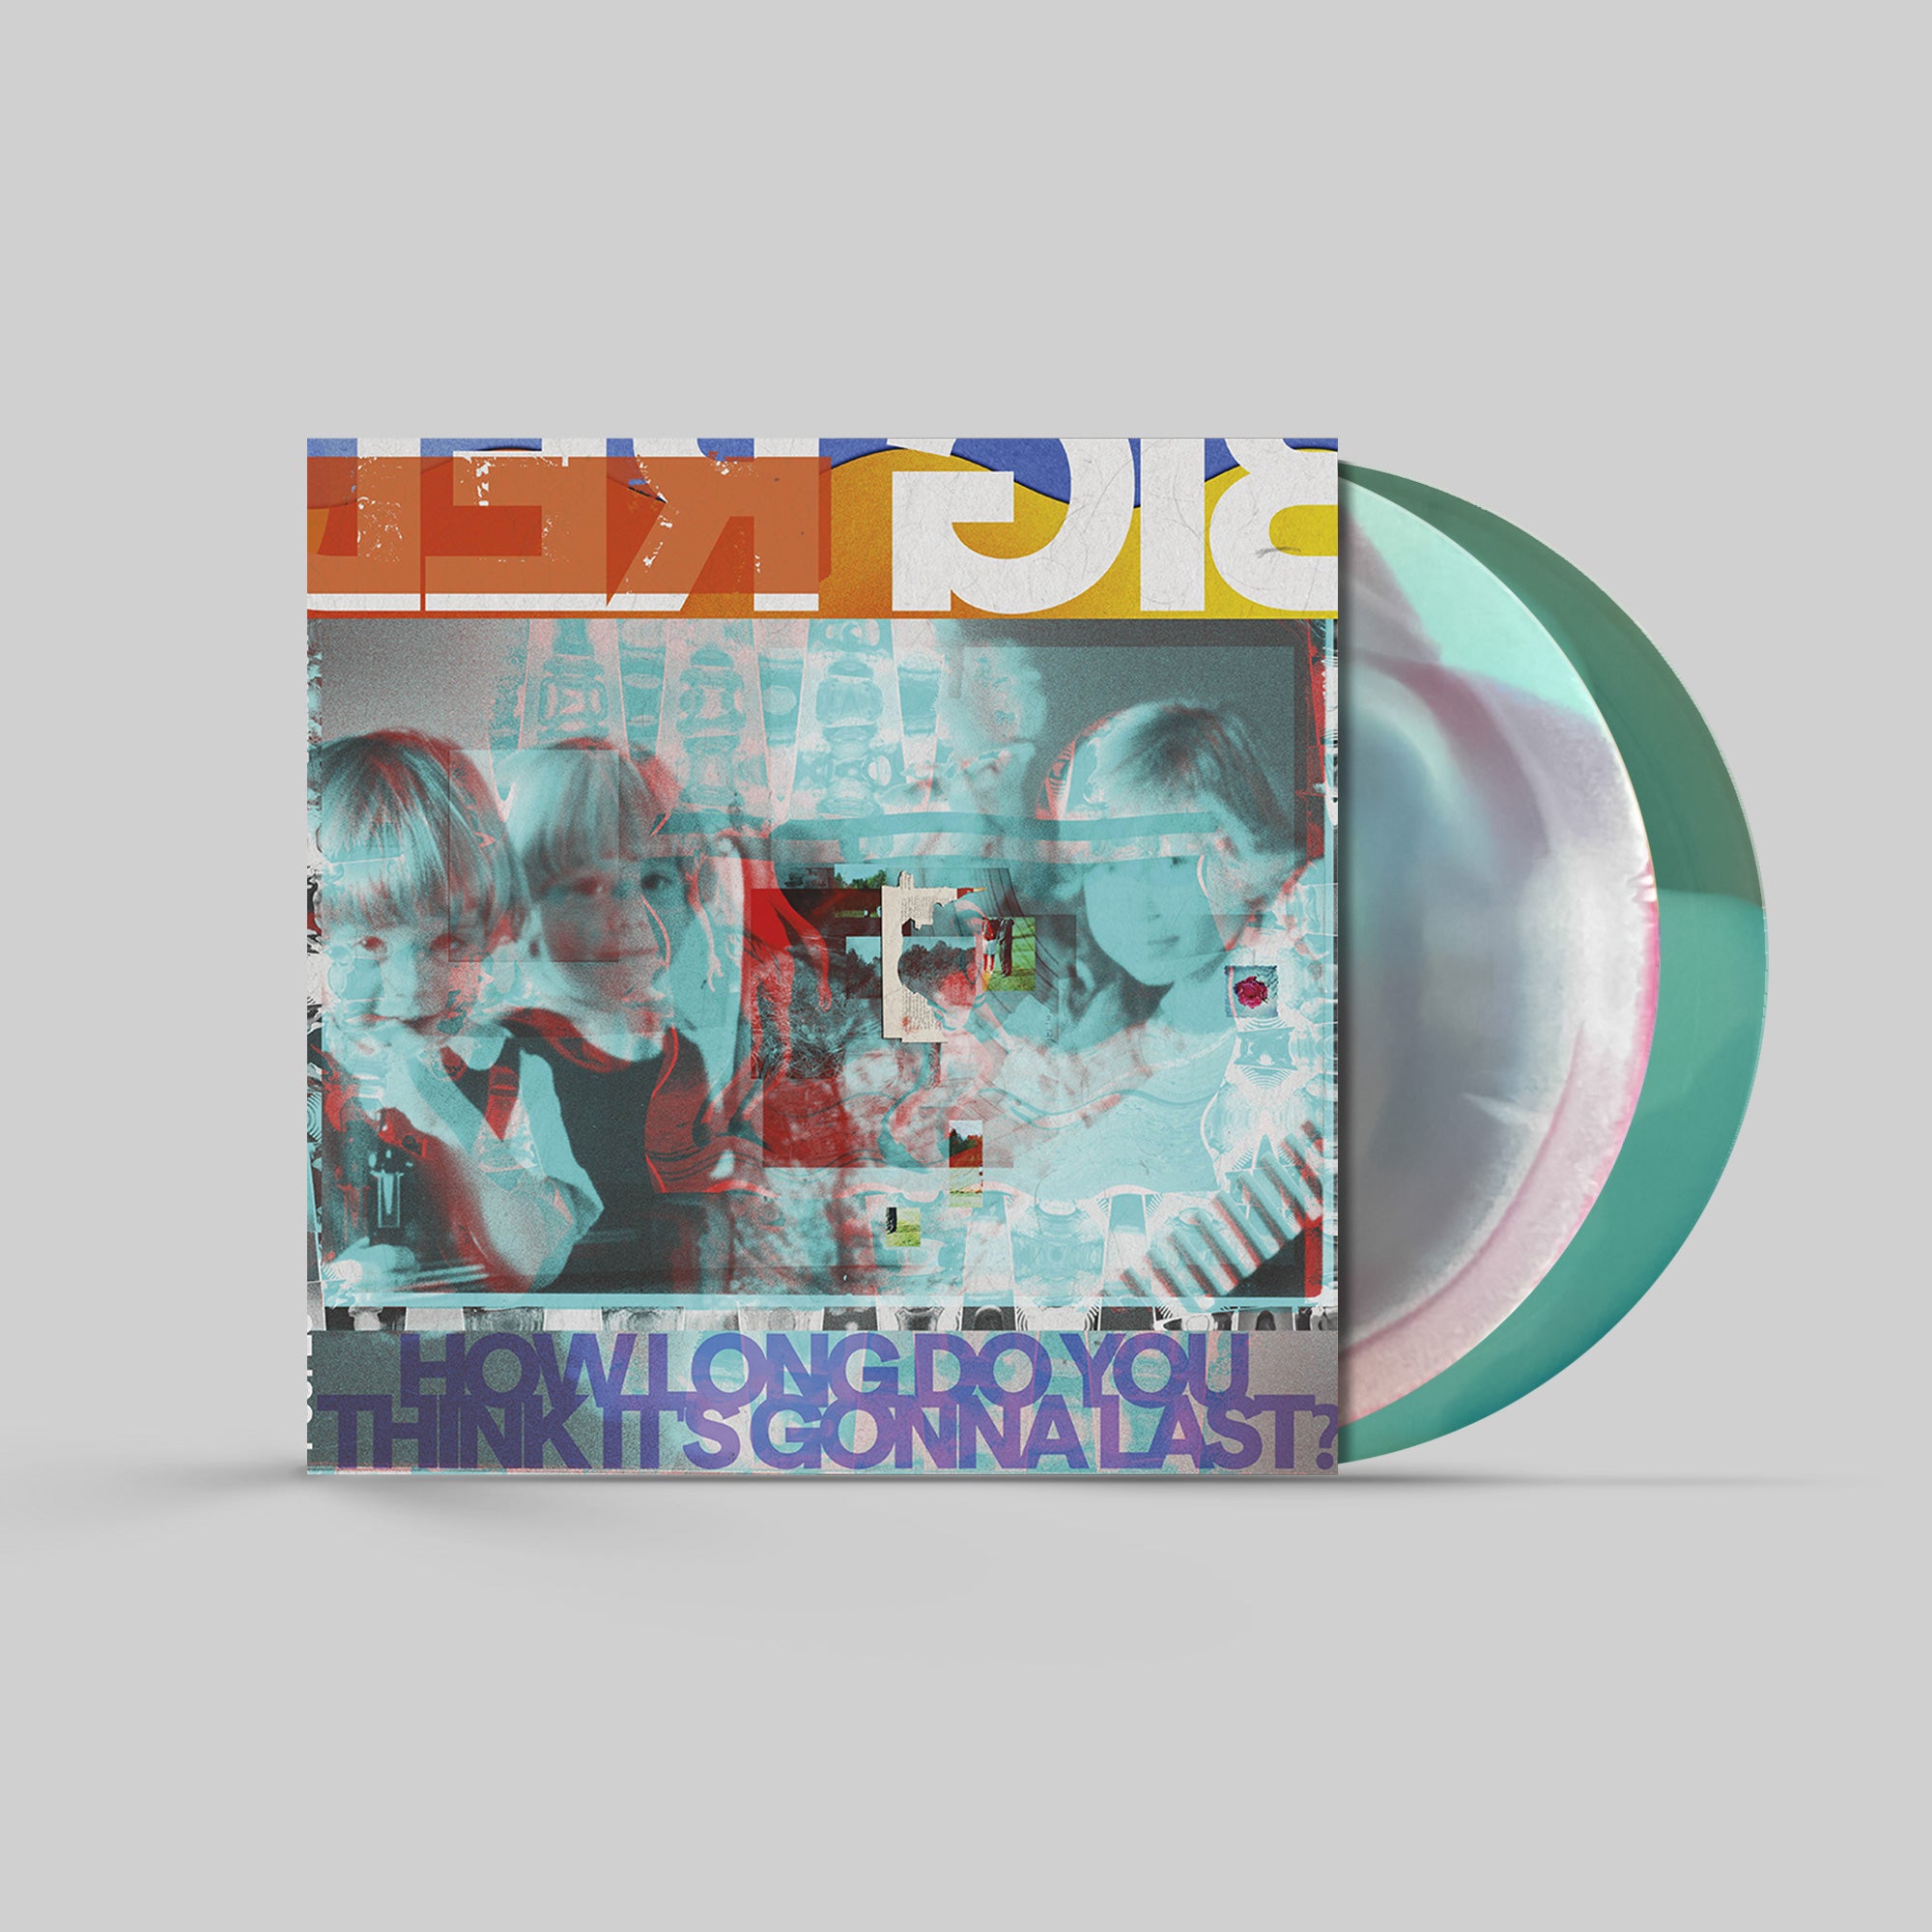 Udgangspunktet Kor Bevise How Long Do You Think It's Gonna Last? (Blue/Violet/Turquoise) - LP |  Ambient Inks